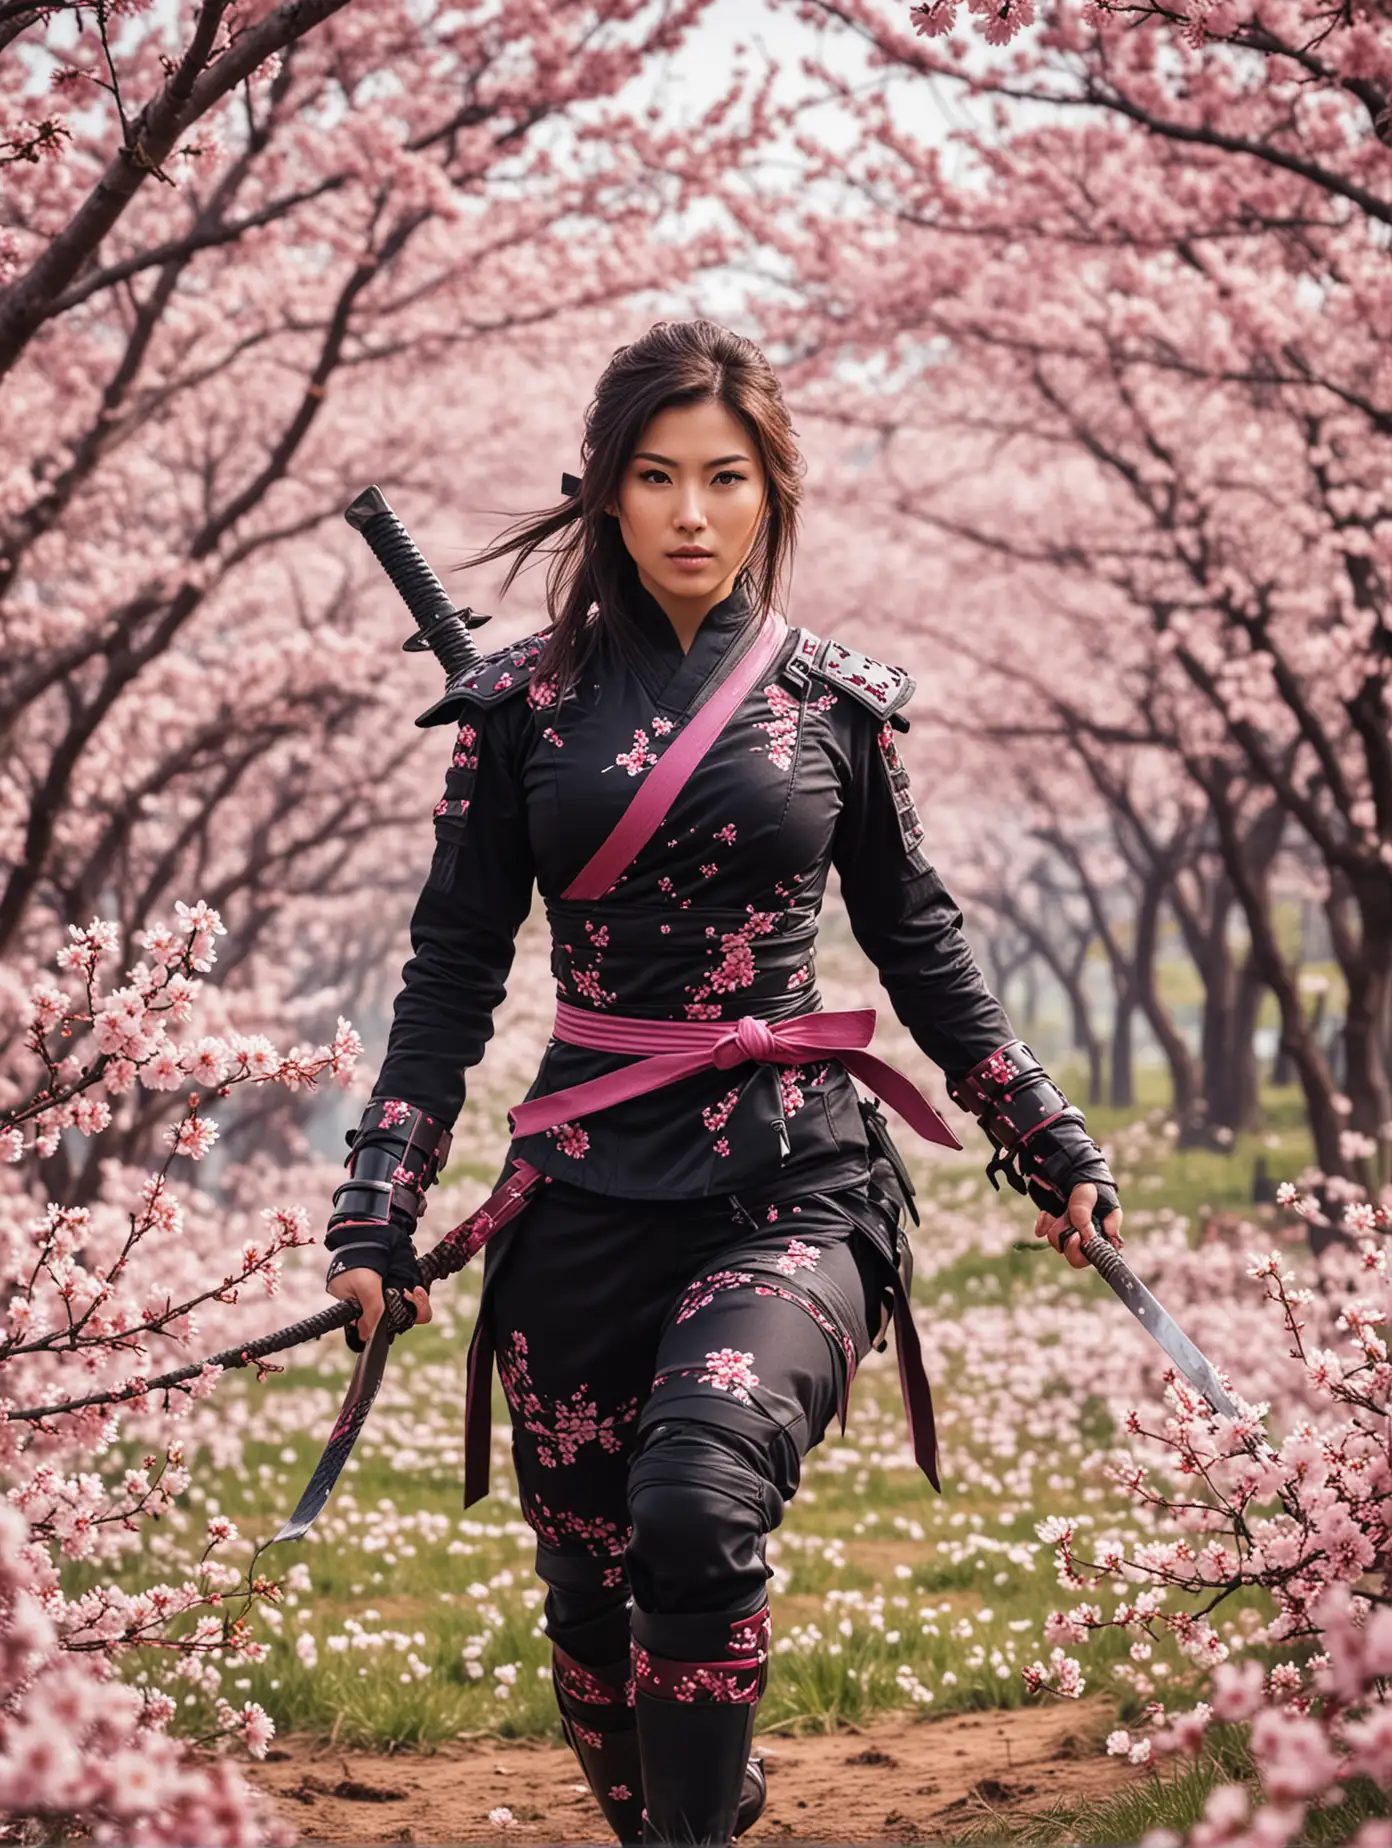 Stunning Cherry Blossom Field Ninja Warrior HD Wallpaper